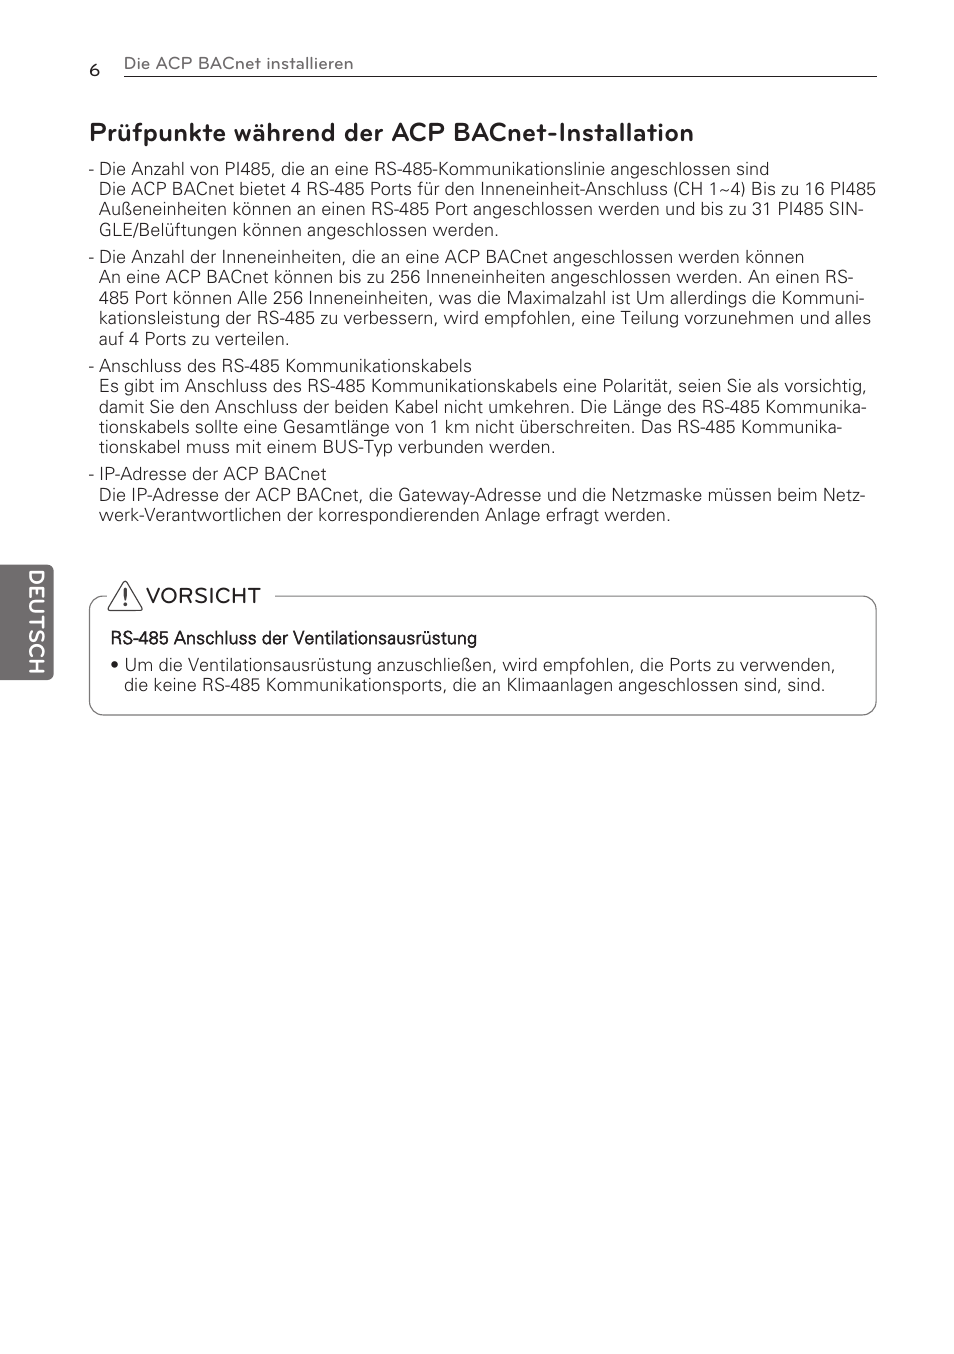 Prüfpunkte während der acp bacnet-installation | LG PQNFB17C0 User Manual | Page 54 / 109